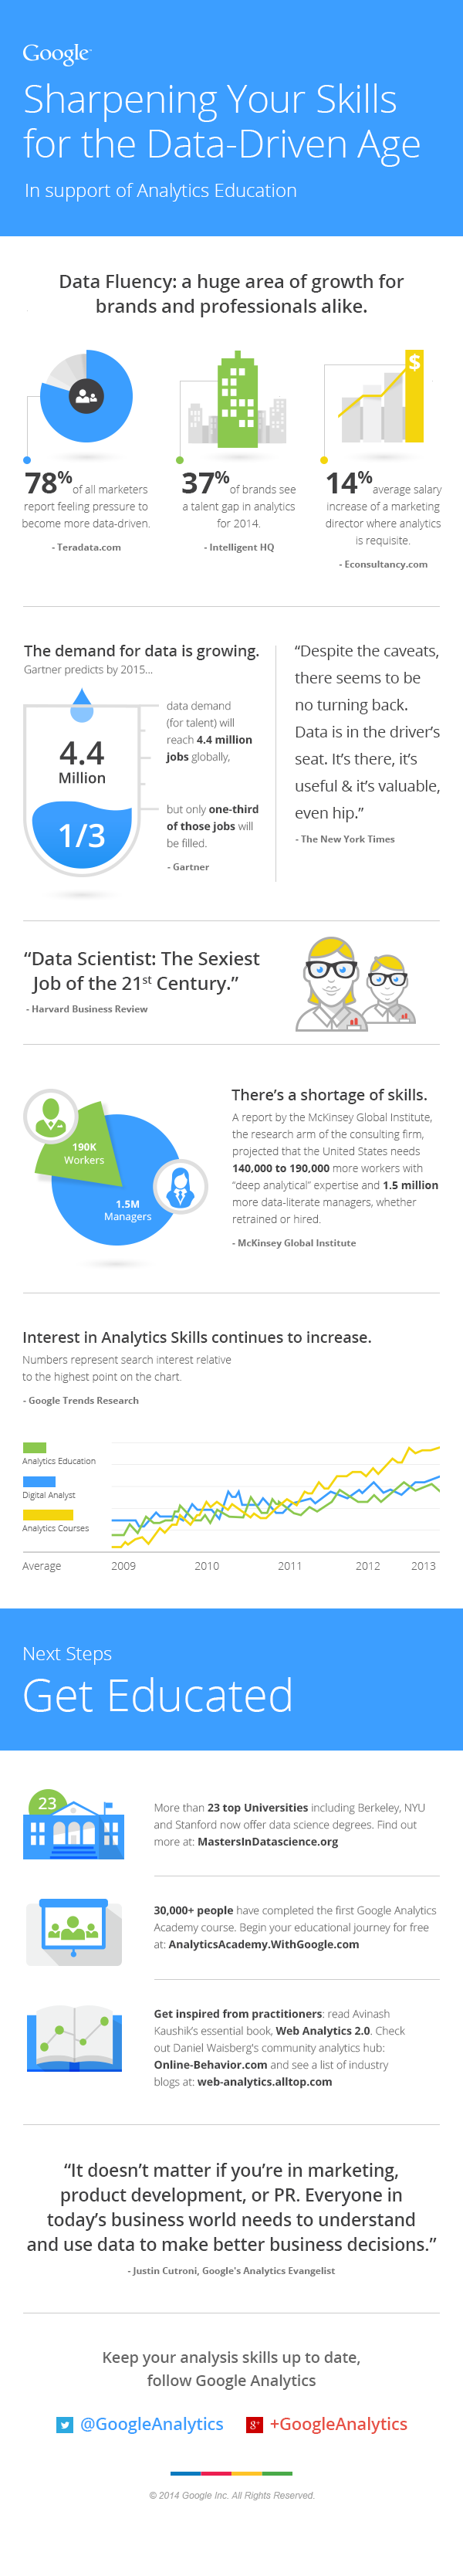 Google Analytics Education Infographic - 2014